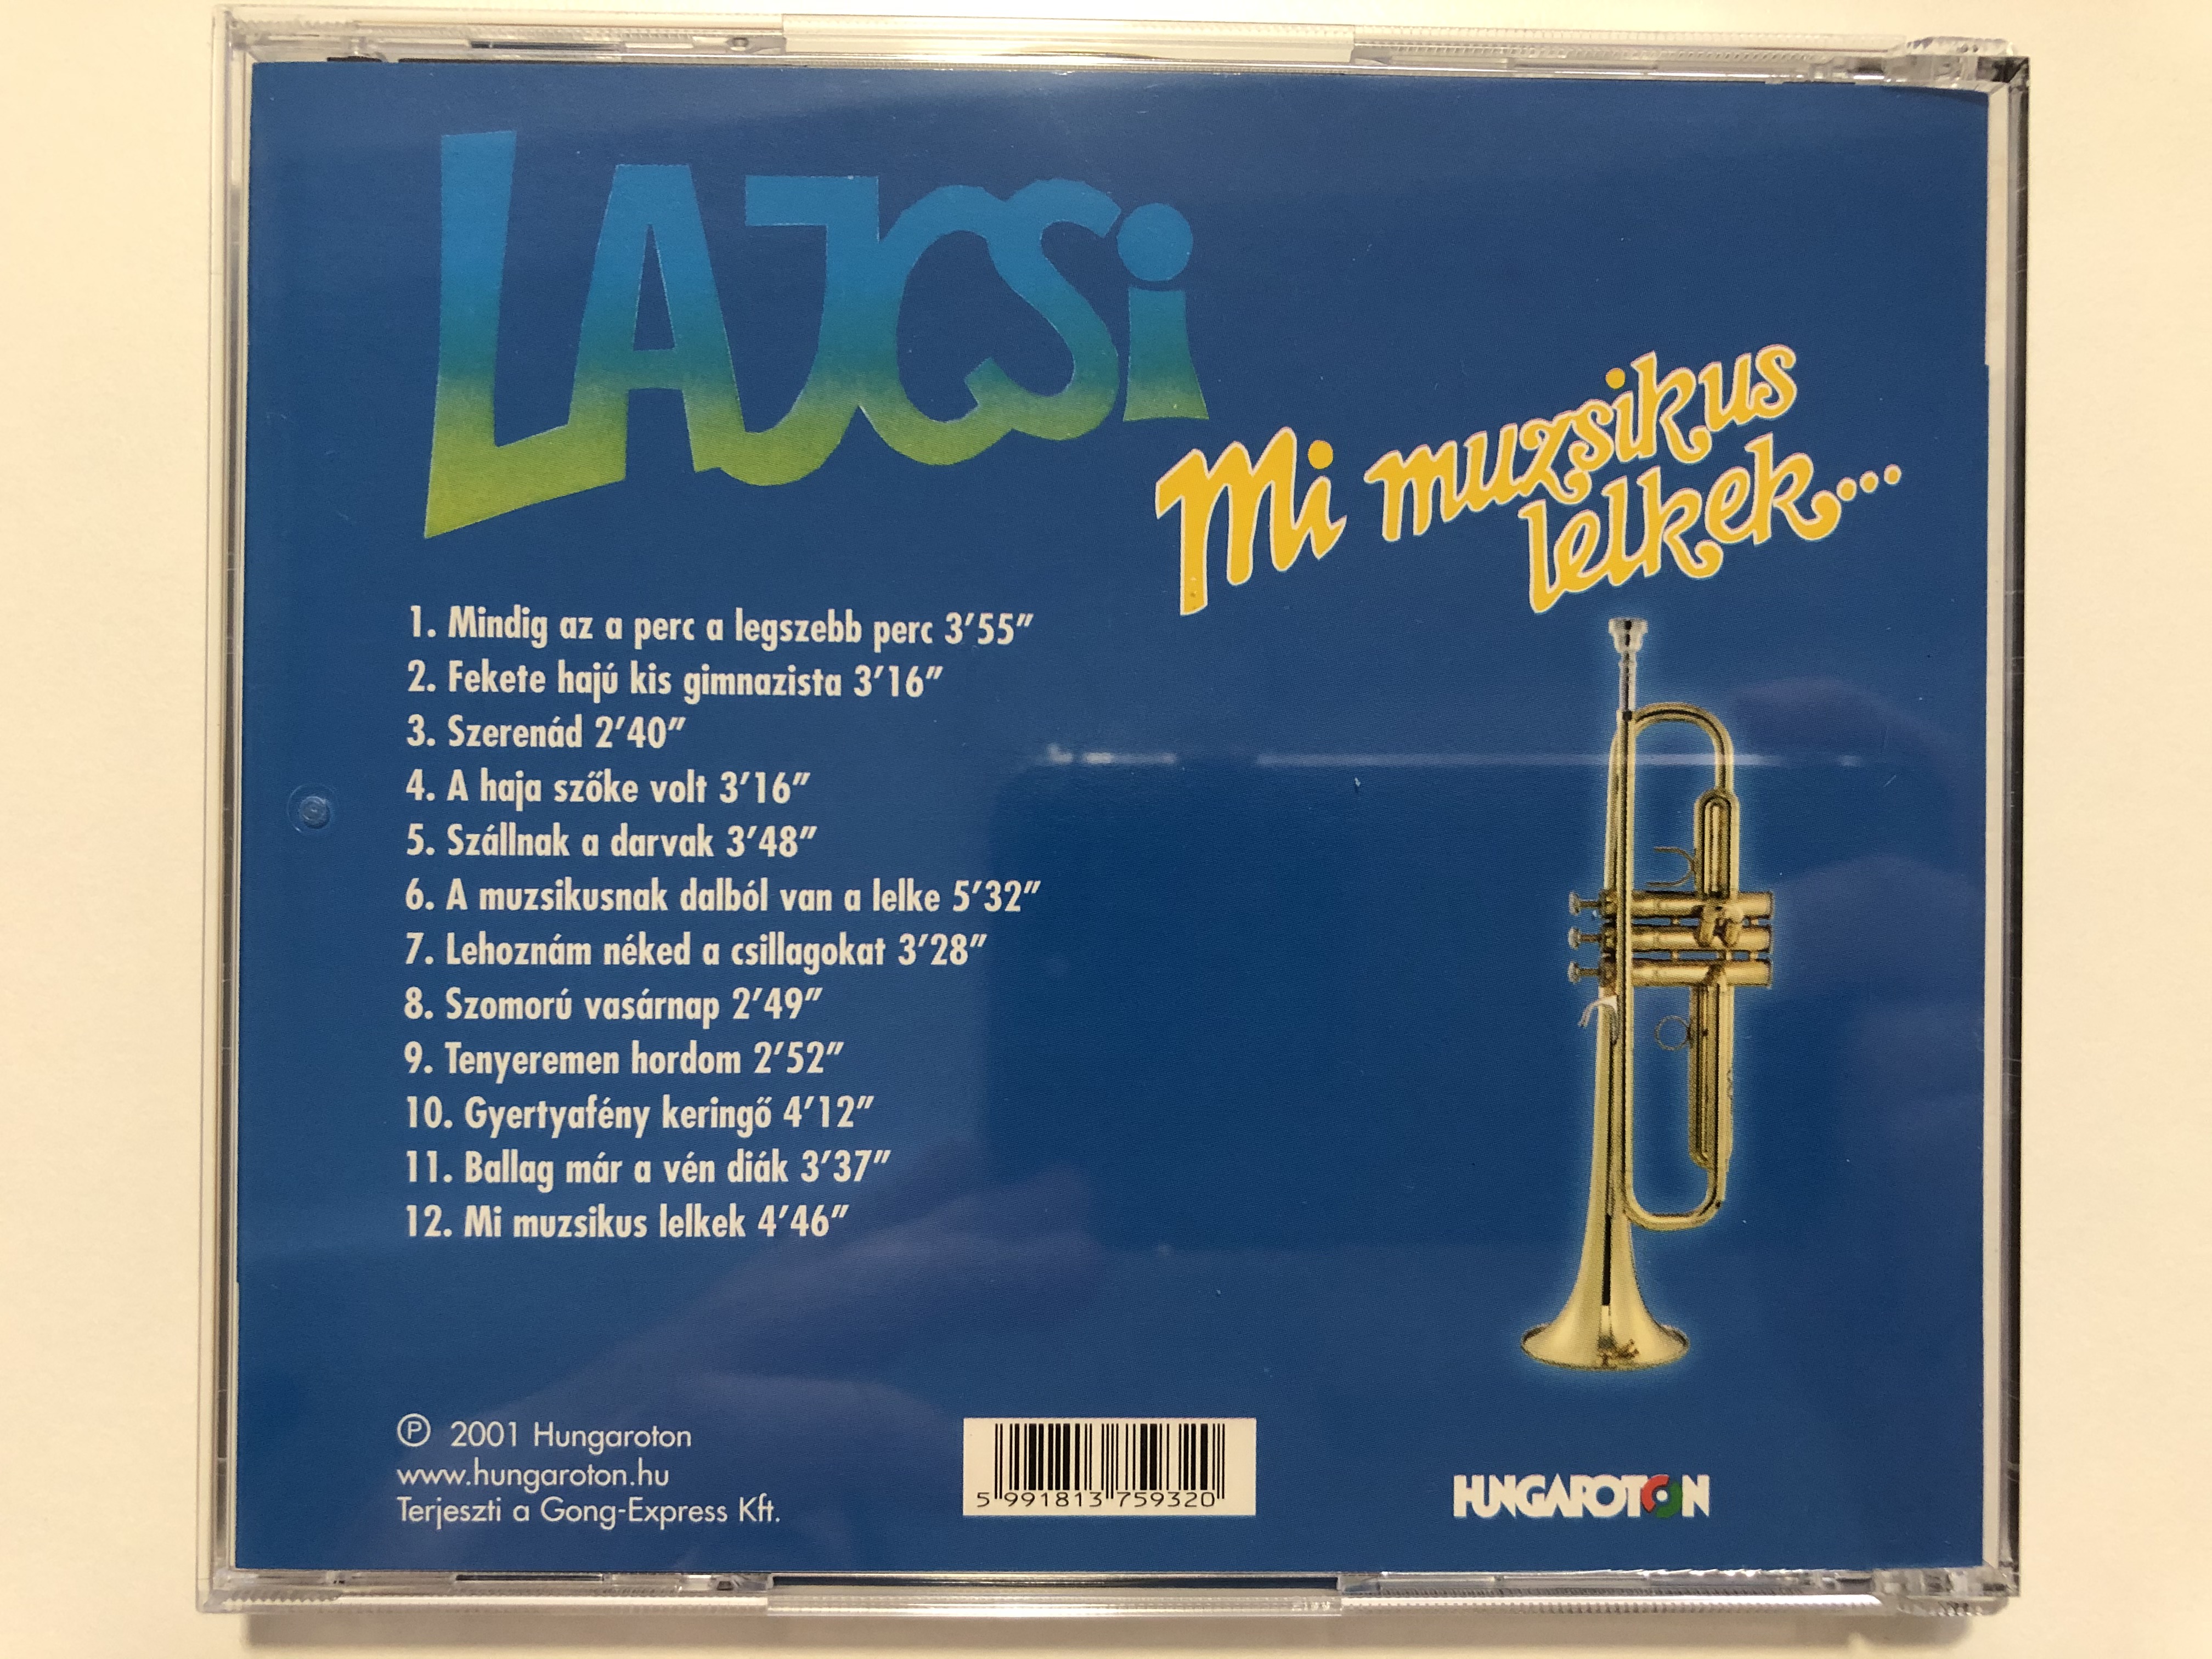 lajcsi-mi-muzsikus-lelkek...-trombitaszolok-orokzold-dalok-lagzi-lajcsi-8-hungaroton-audio-cd-2001-hcd-37593-5-.jpg